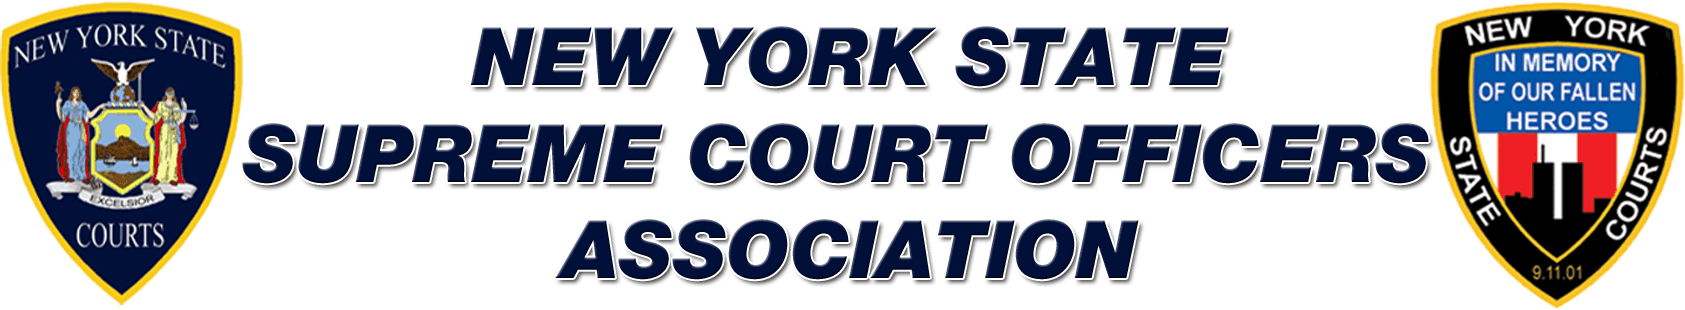 New York Supreme Court Logo - Supreme Court Officers Association